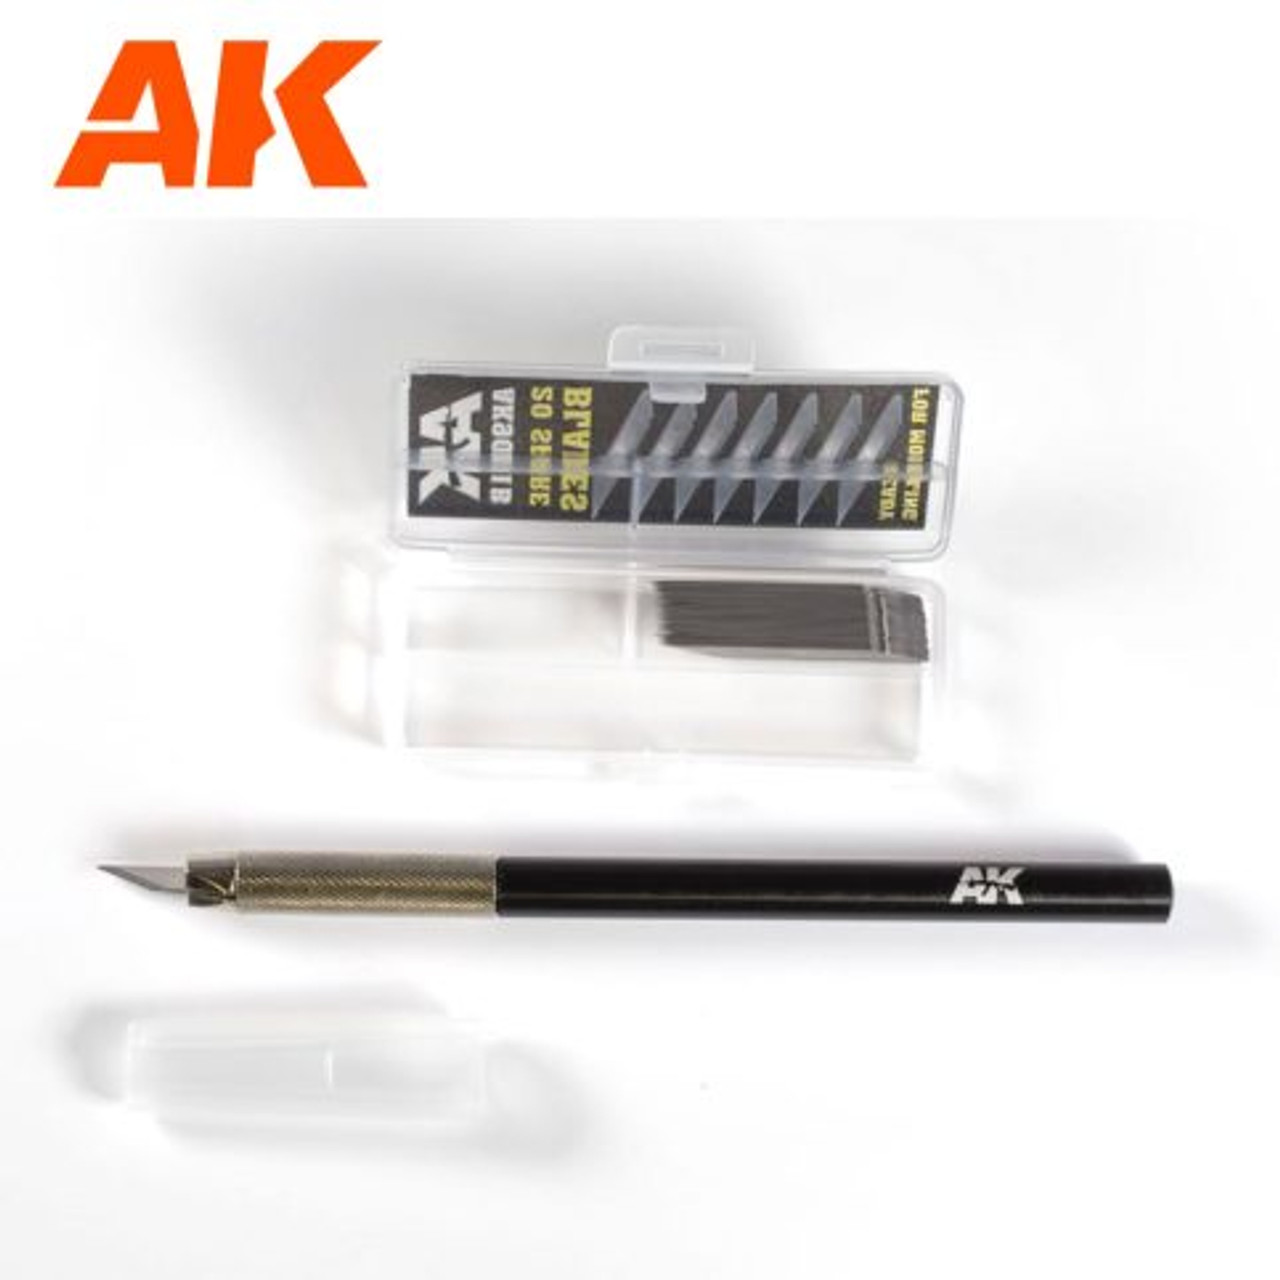 AK-Interactive: Precision Cutting Tool